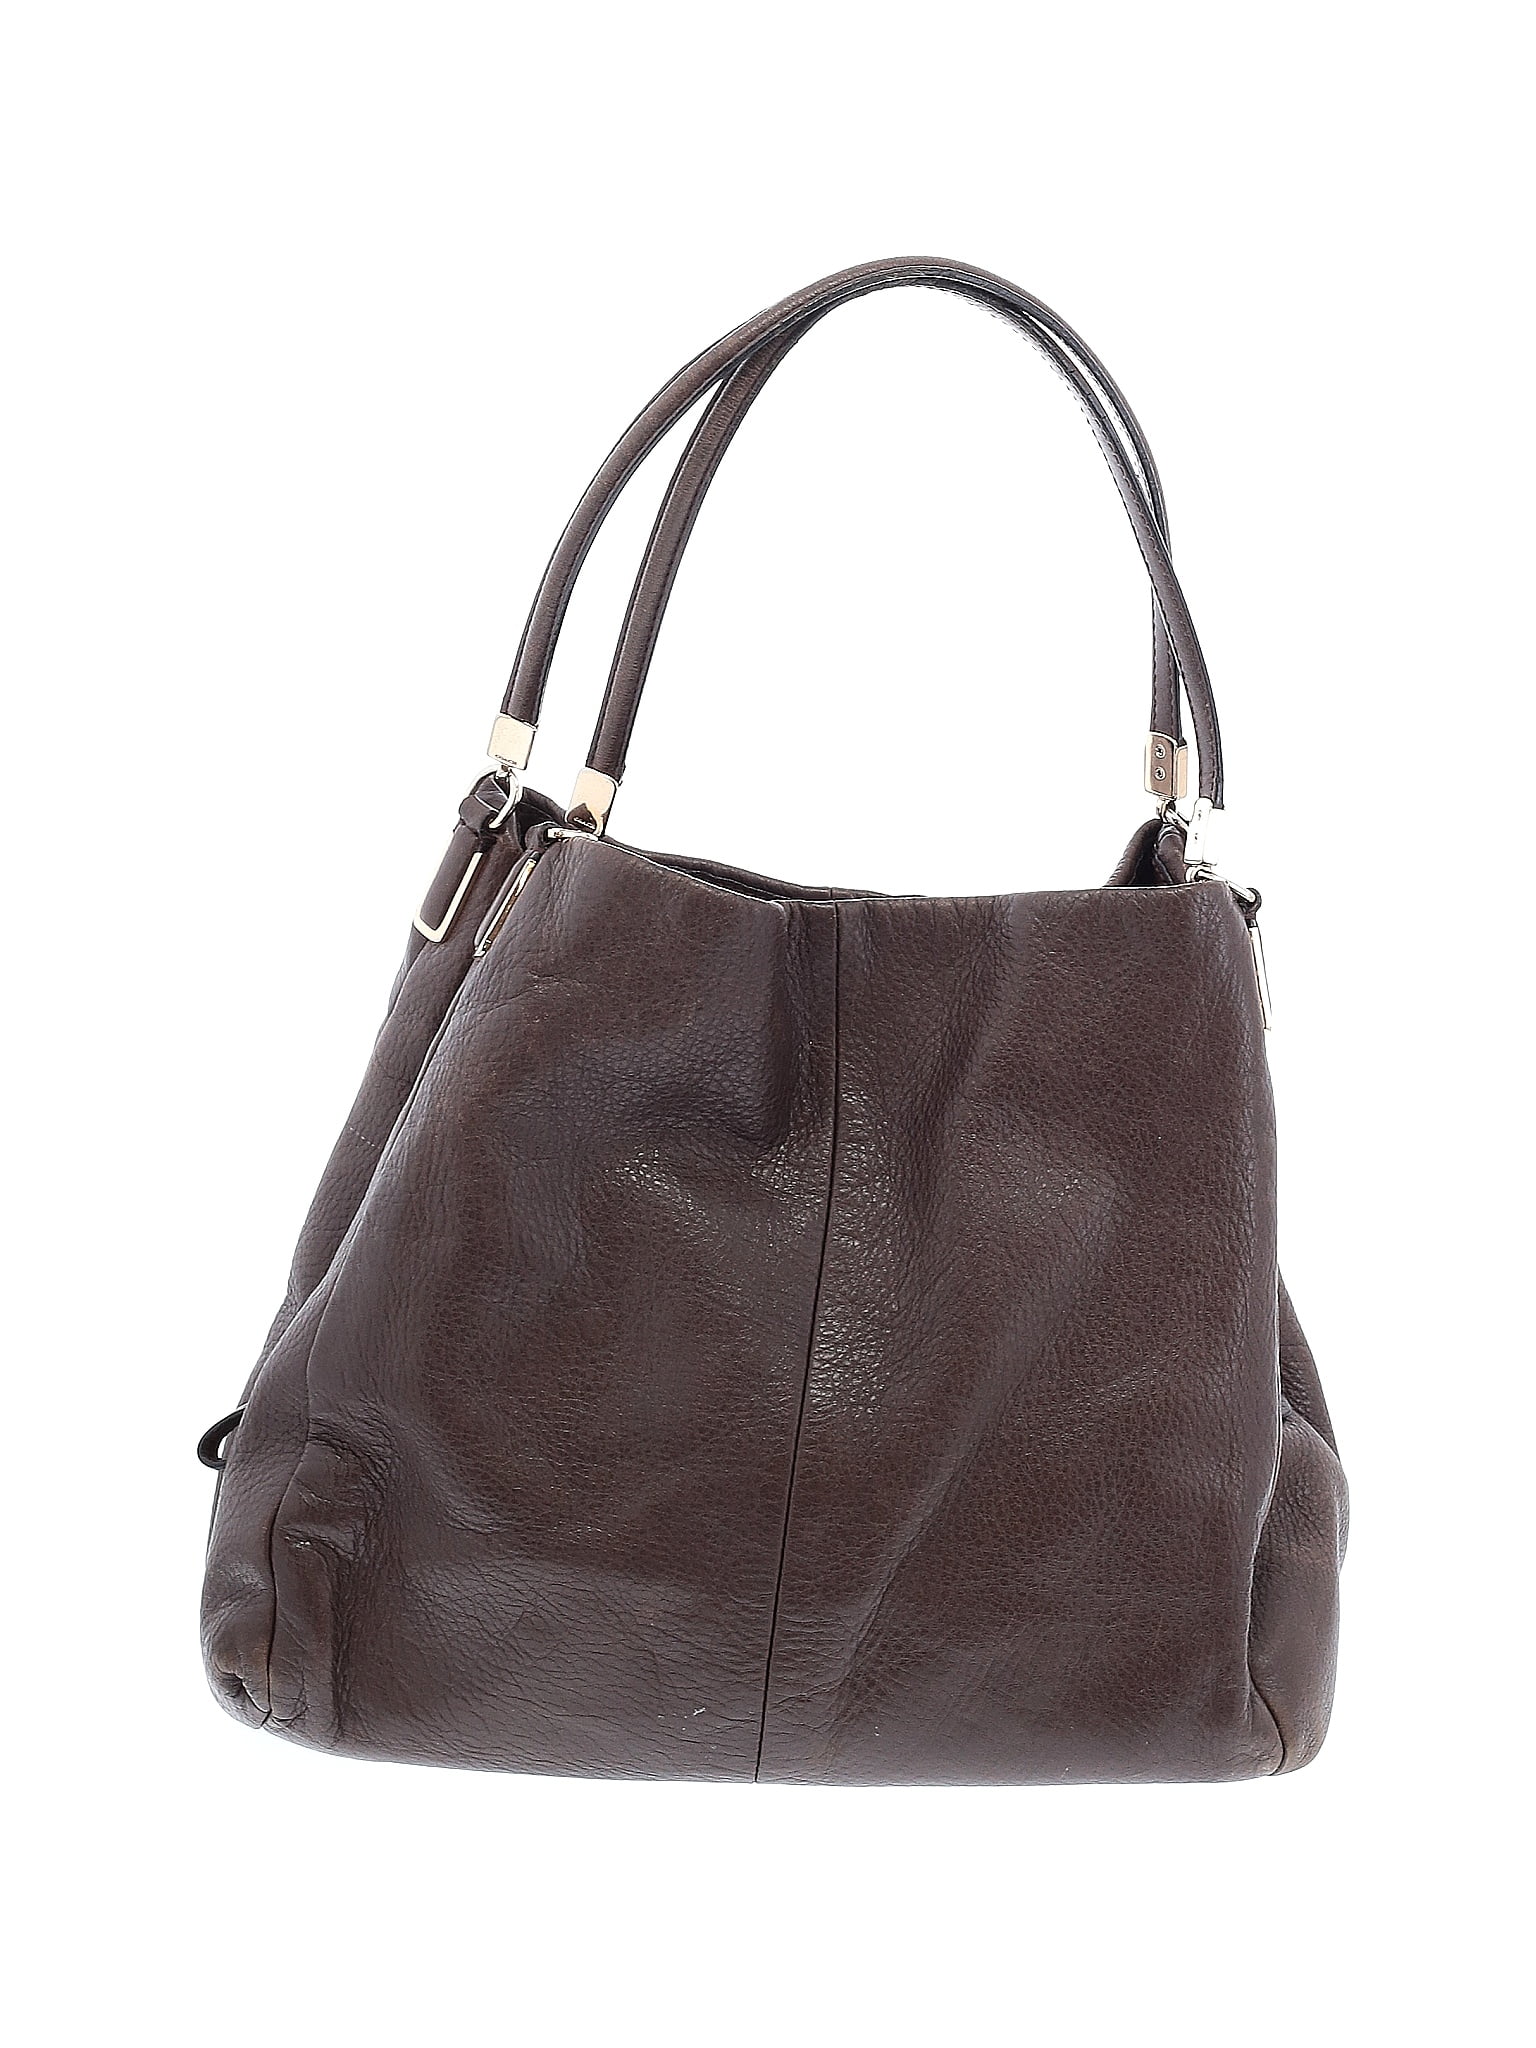 Coach 100% Leather Brown Leather Shoulder Bag One Size - 74% off | thredUP